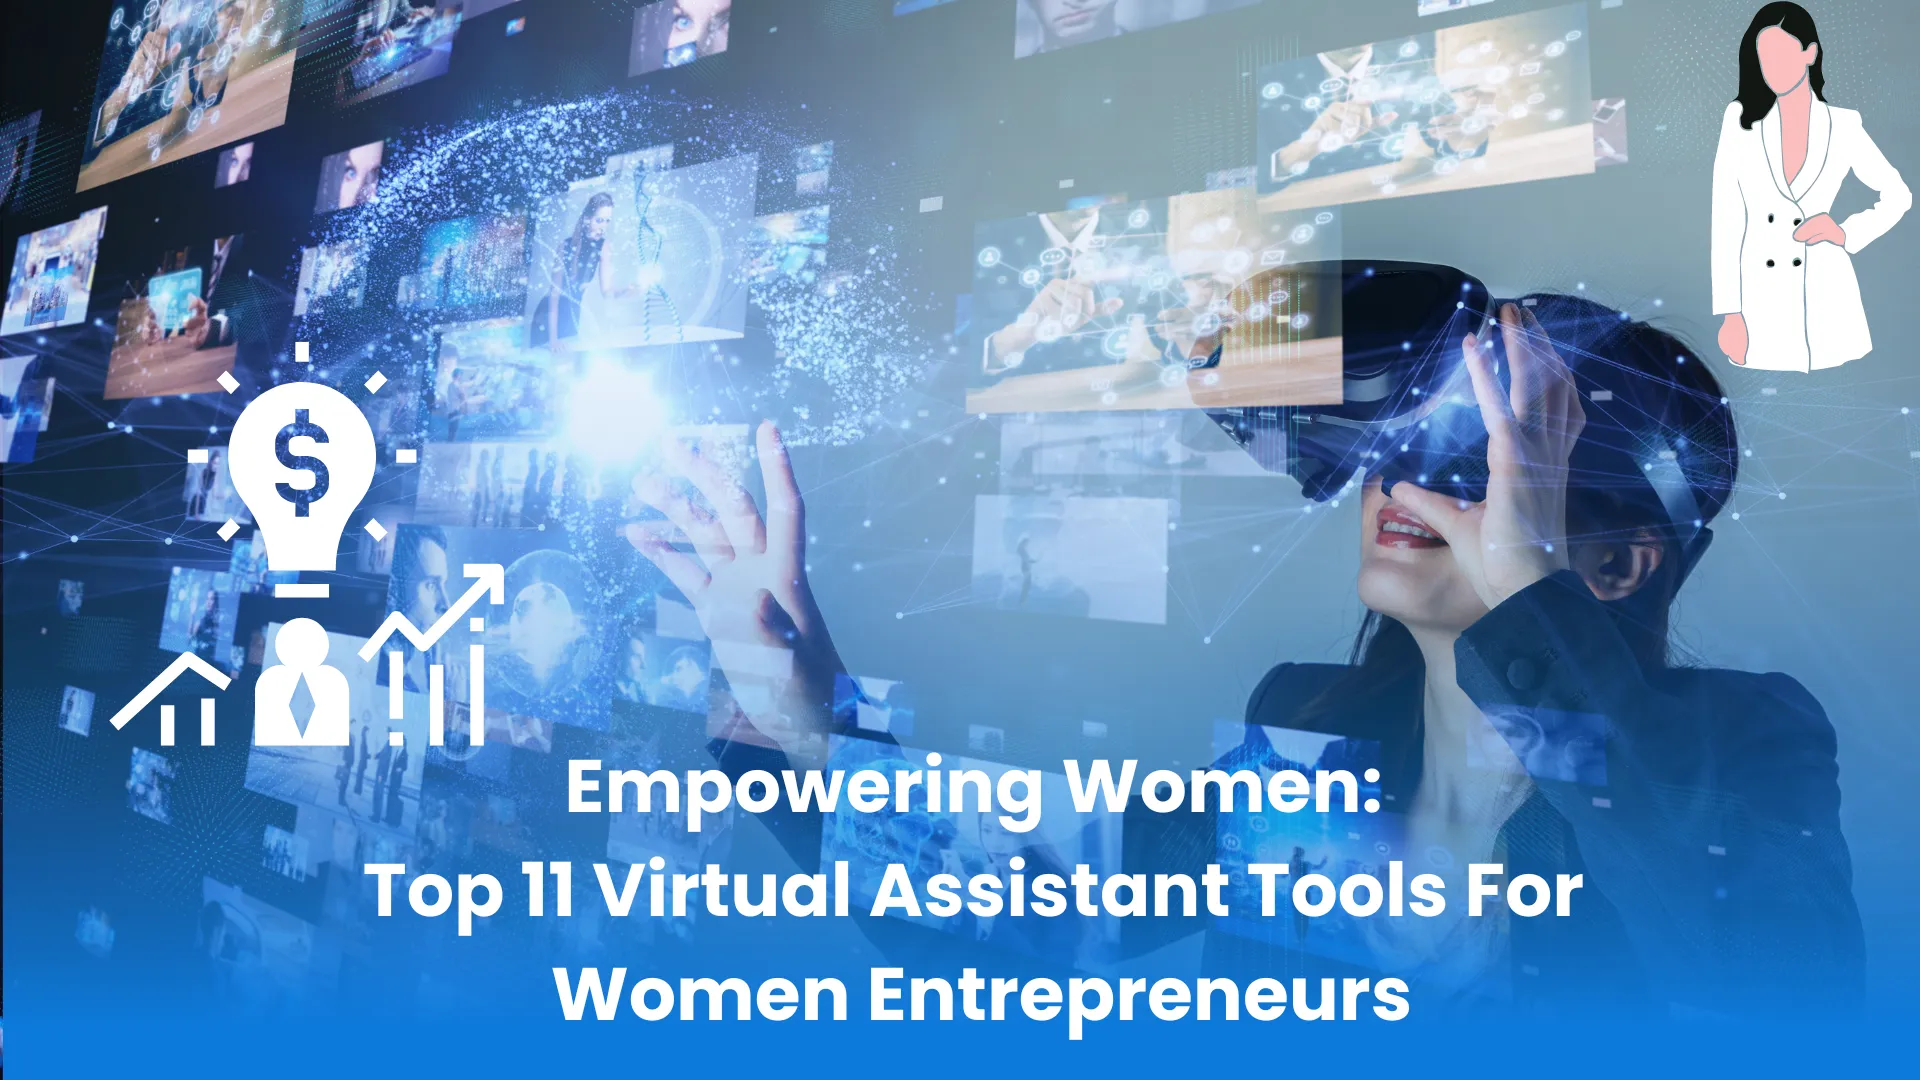 Virtual assistant tools for women entrepreneurs